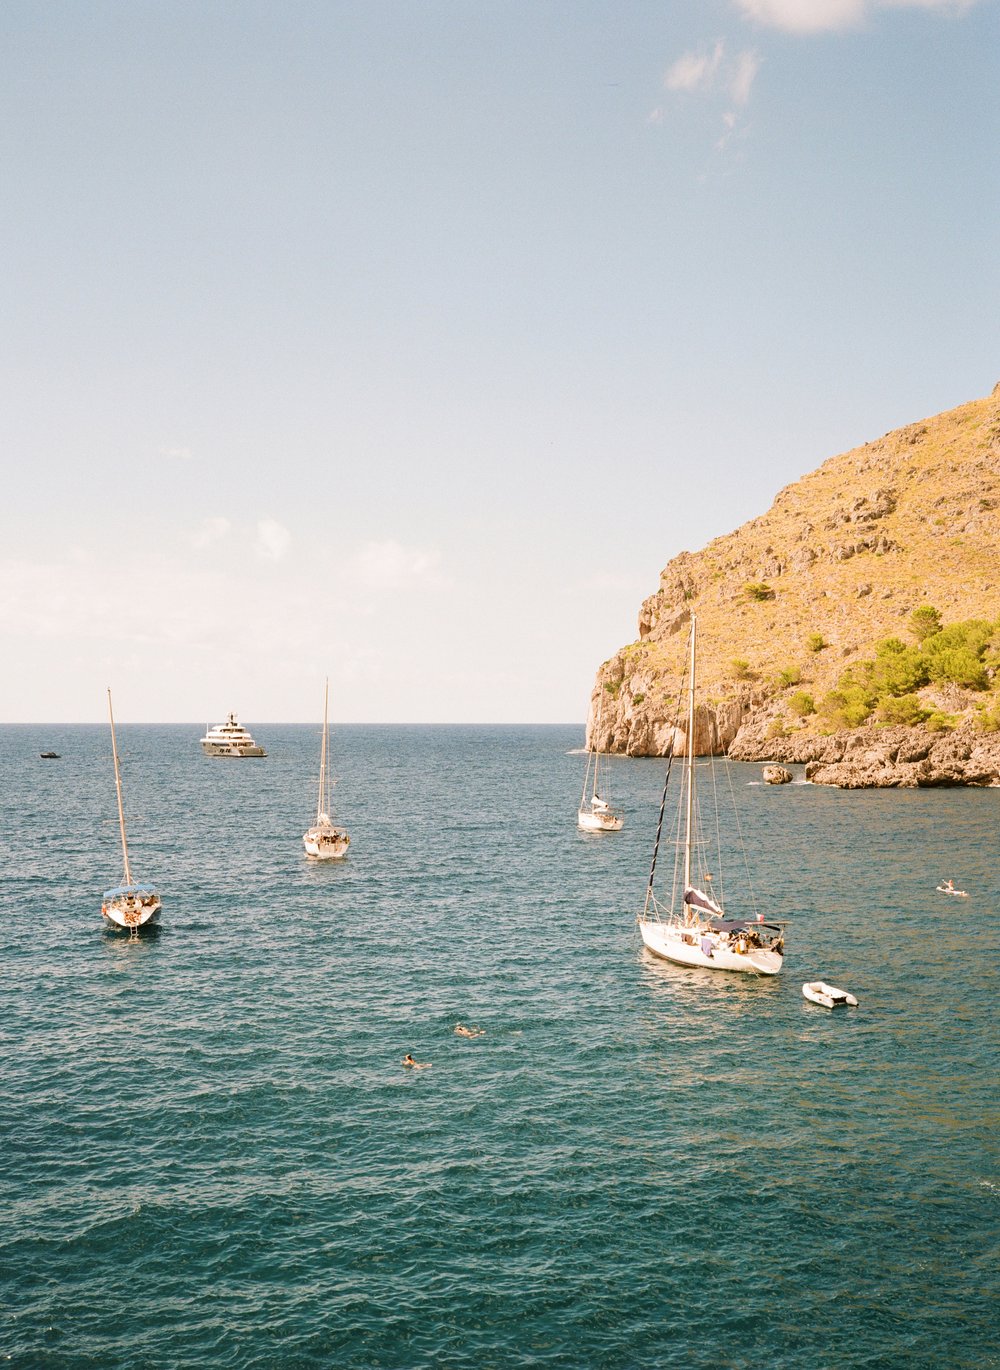  boats in the ocean bay in Mallorca, Spain 